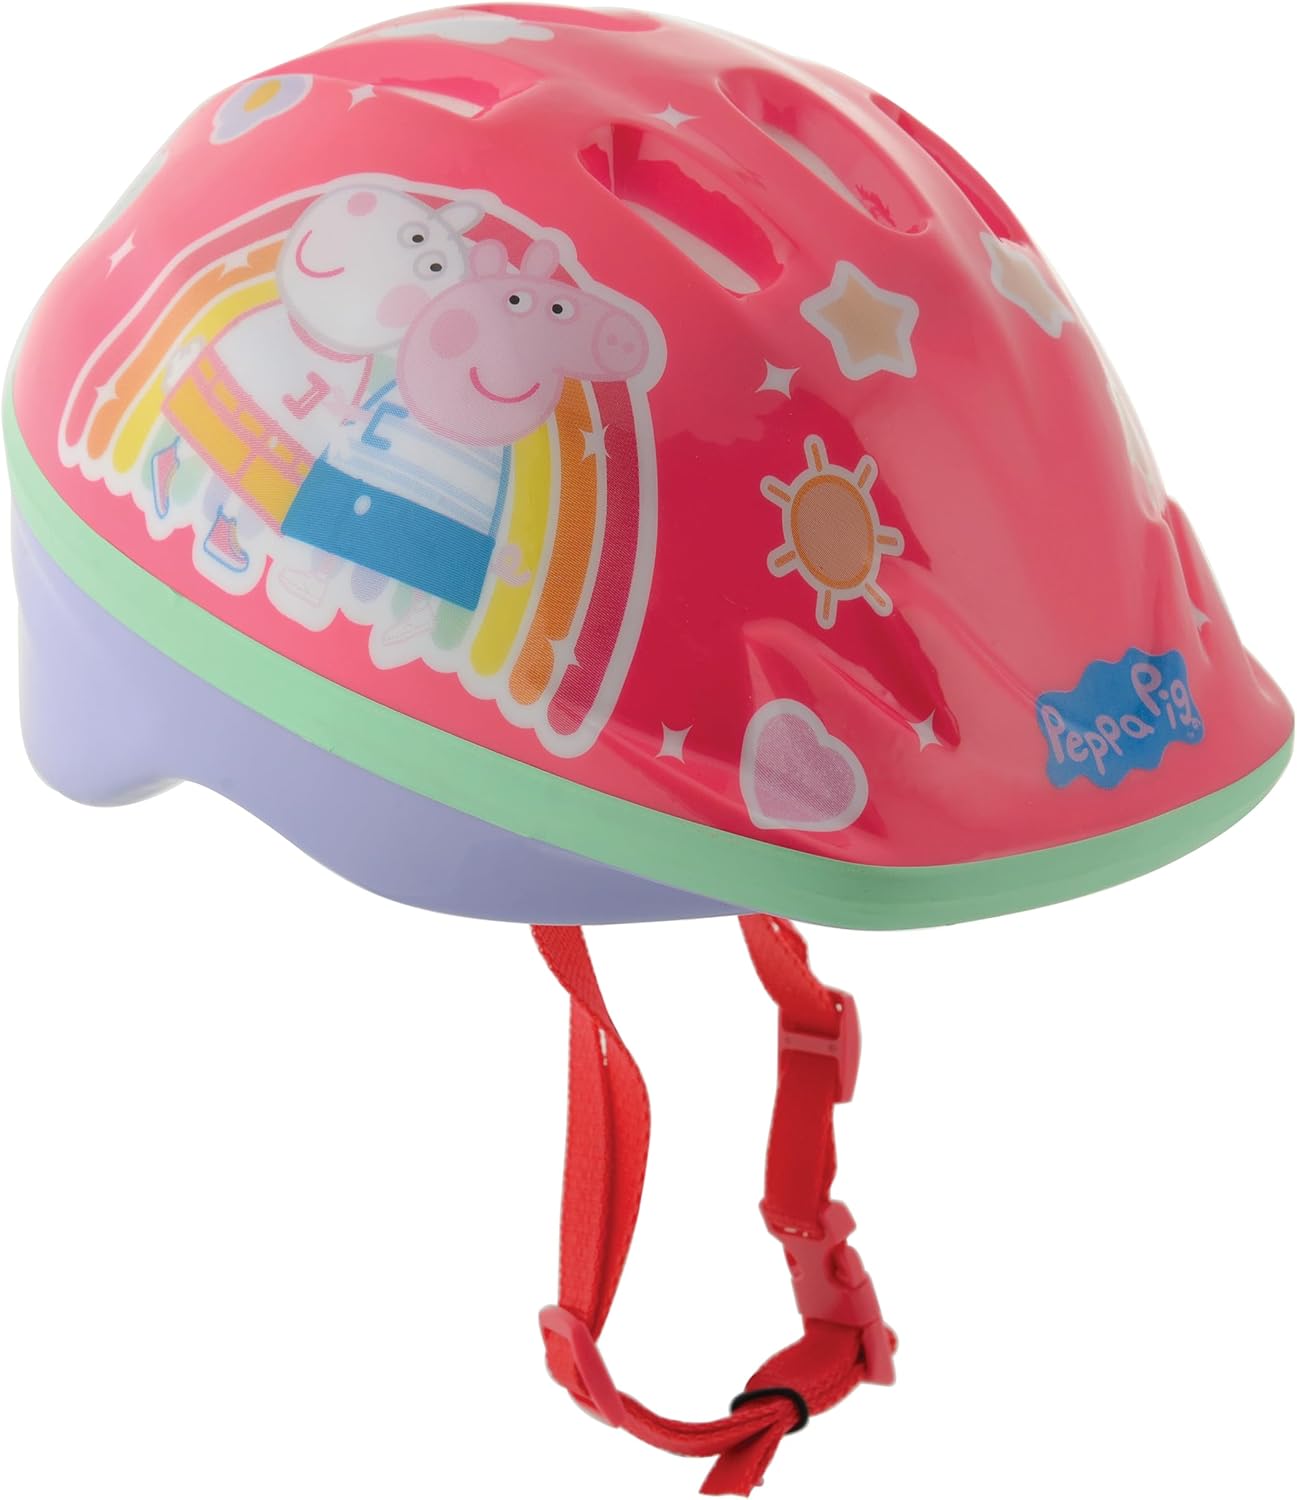 MV Sports Peppa Pig Kids Safety Bike Scooter Helmet Pink 48-52cm